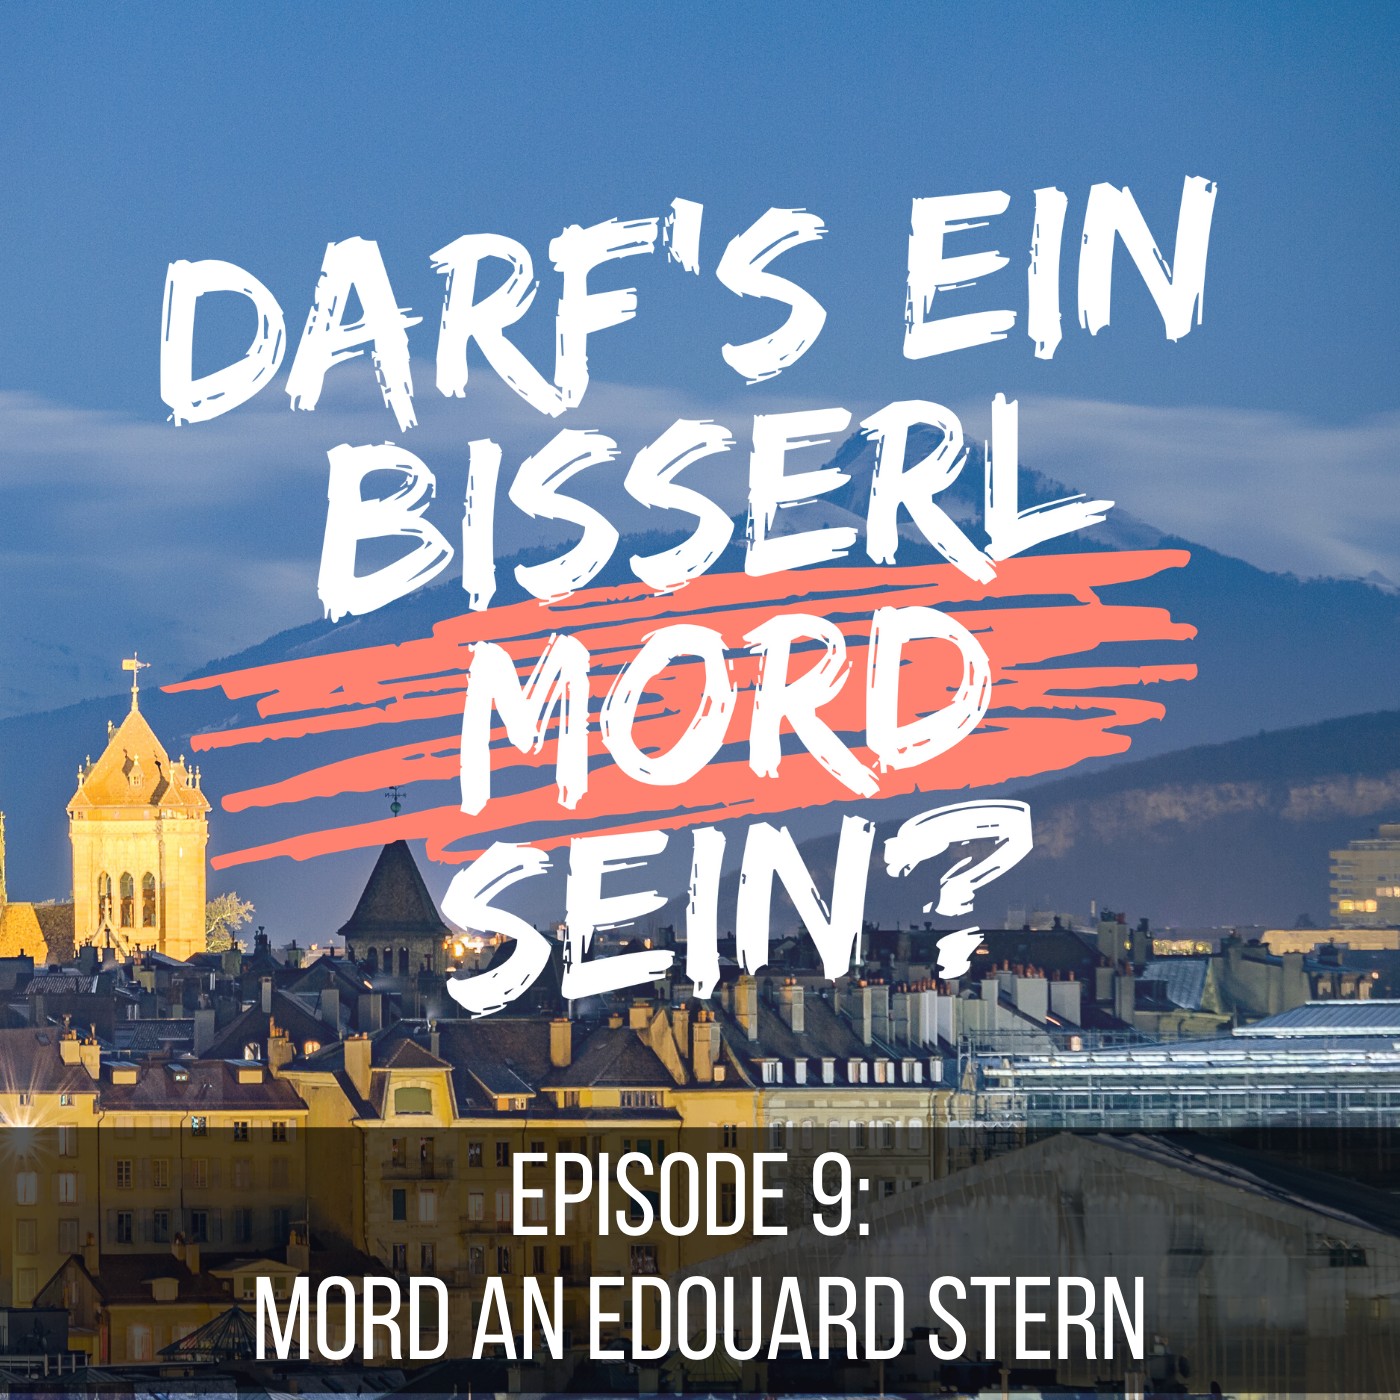 Episode 9: Mord an Edouard Stern